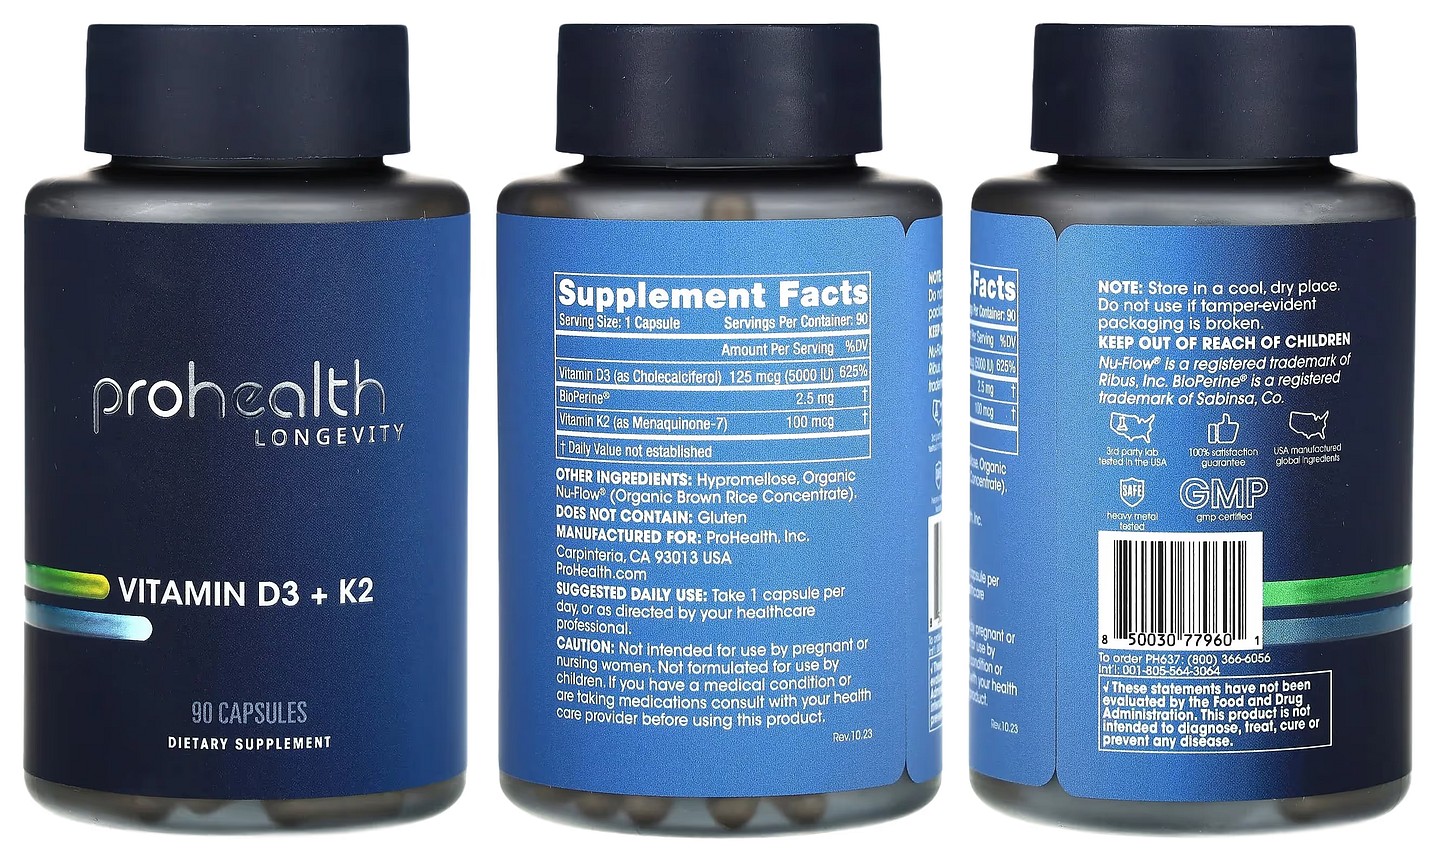 ProHealth Longevity, Vitamin D3 + K2 packaging